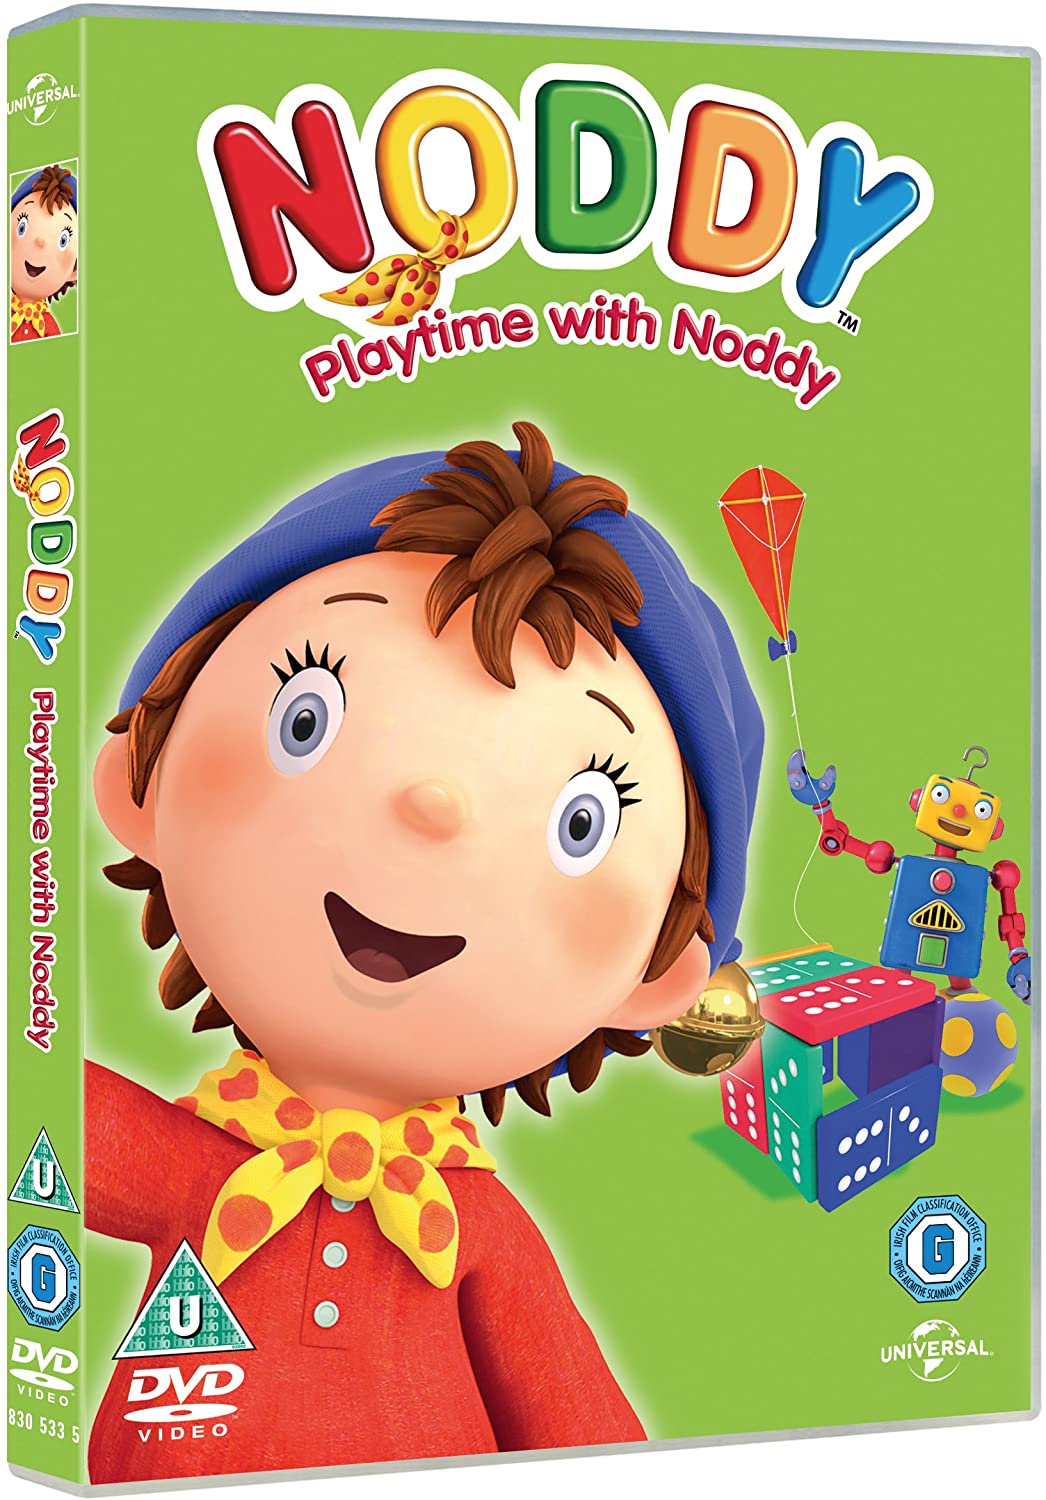 Noddy in Toyland: Playtime with Noddy (DVD)